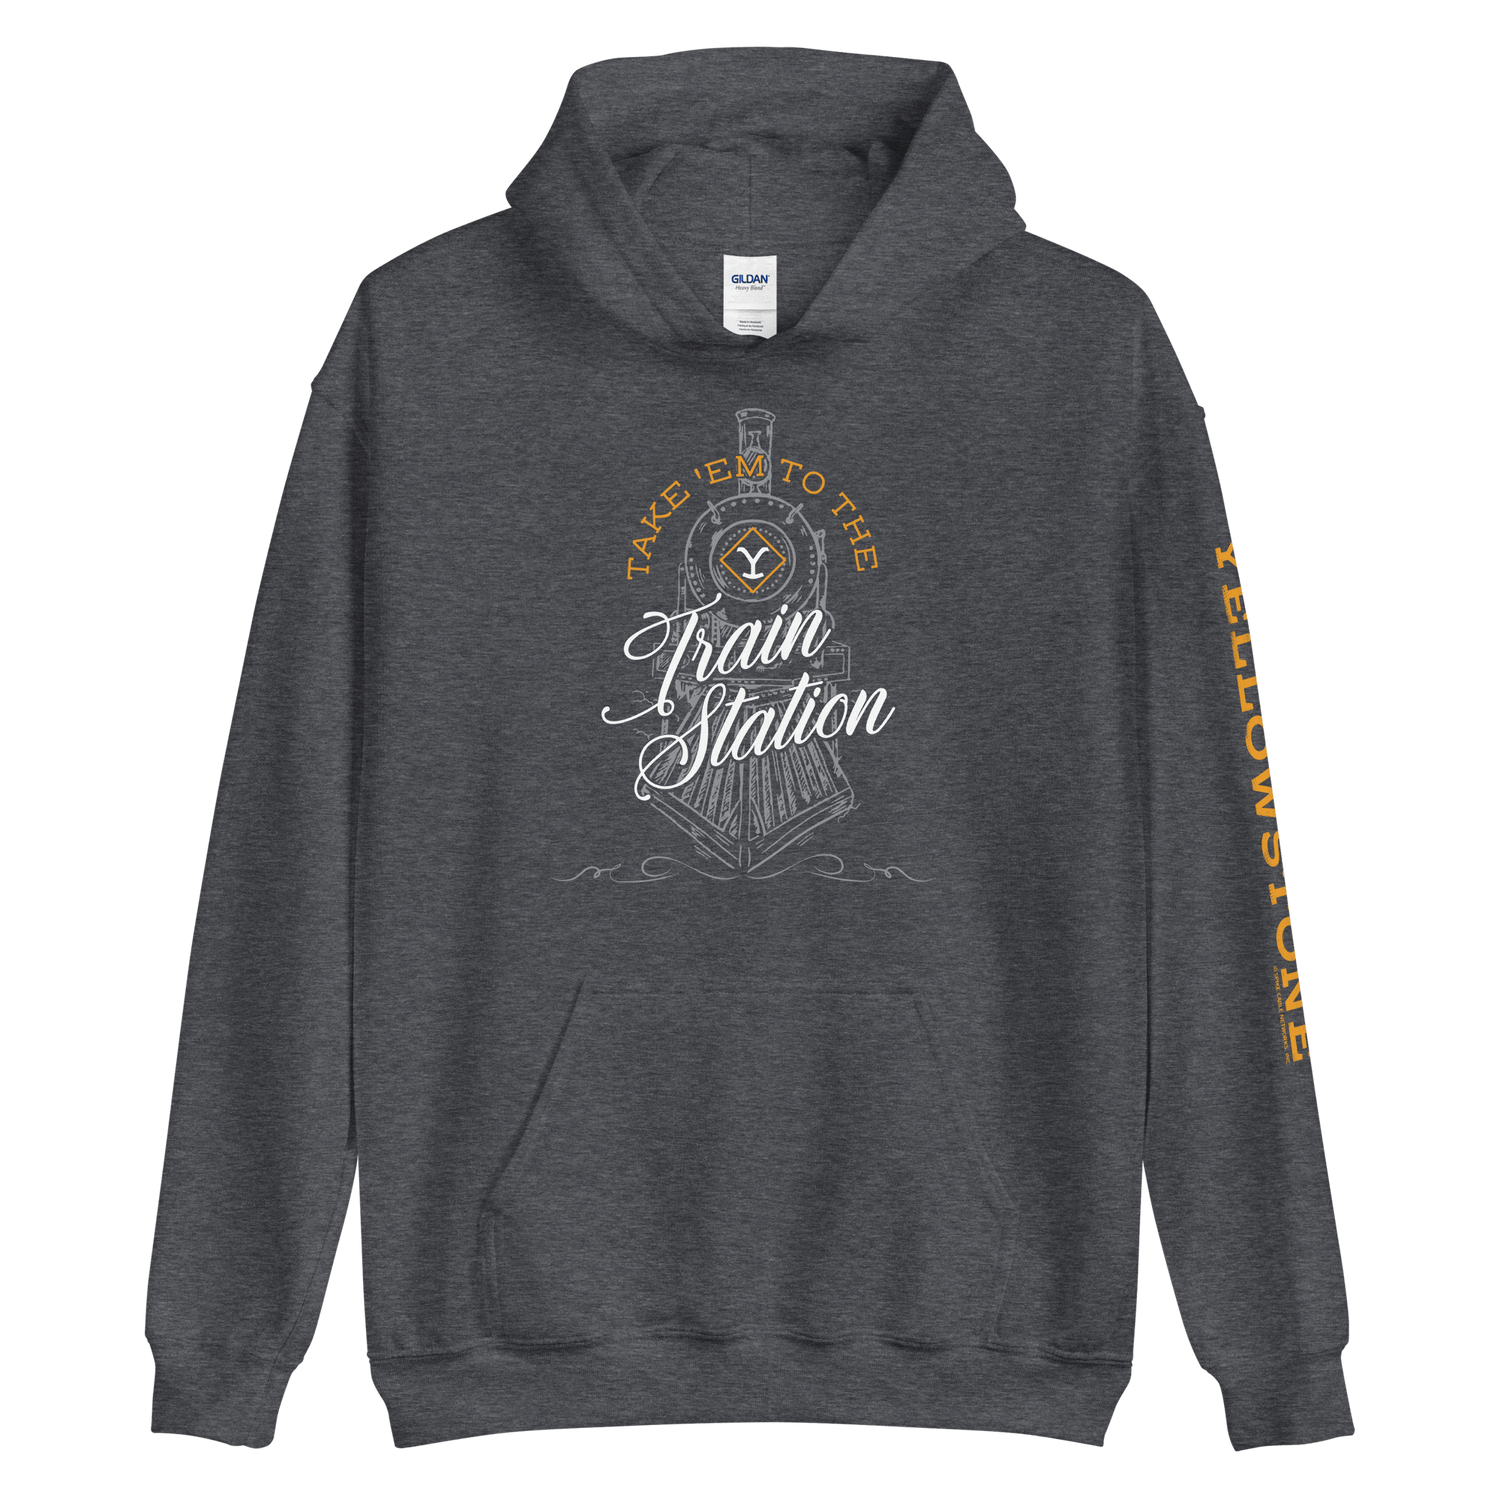 Yellowstone Take 'Em To The Train Station Hooded Sweatshirt - Paramount Shop